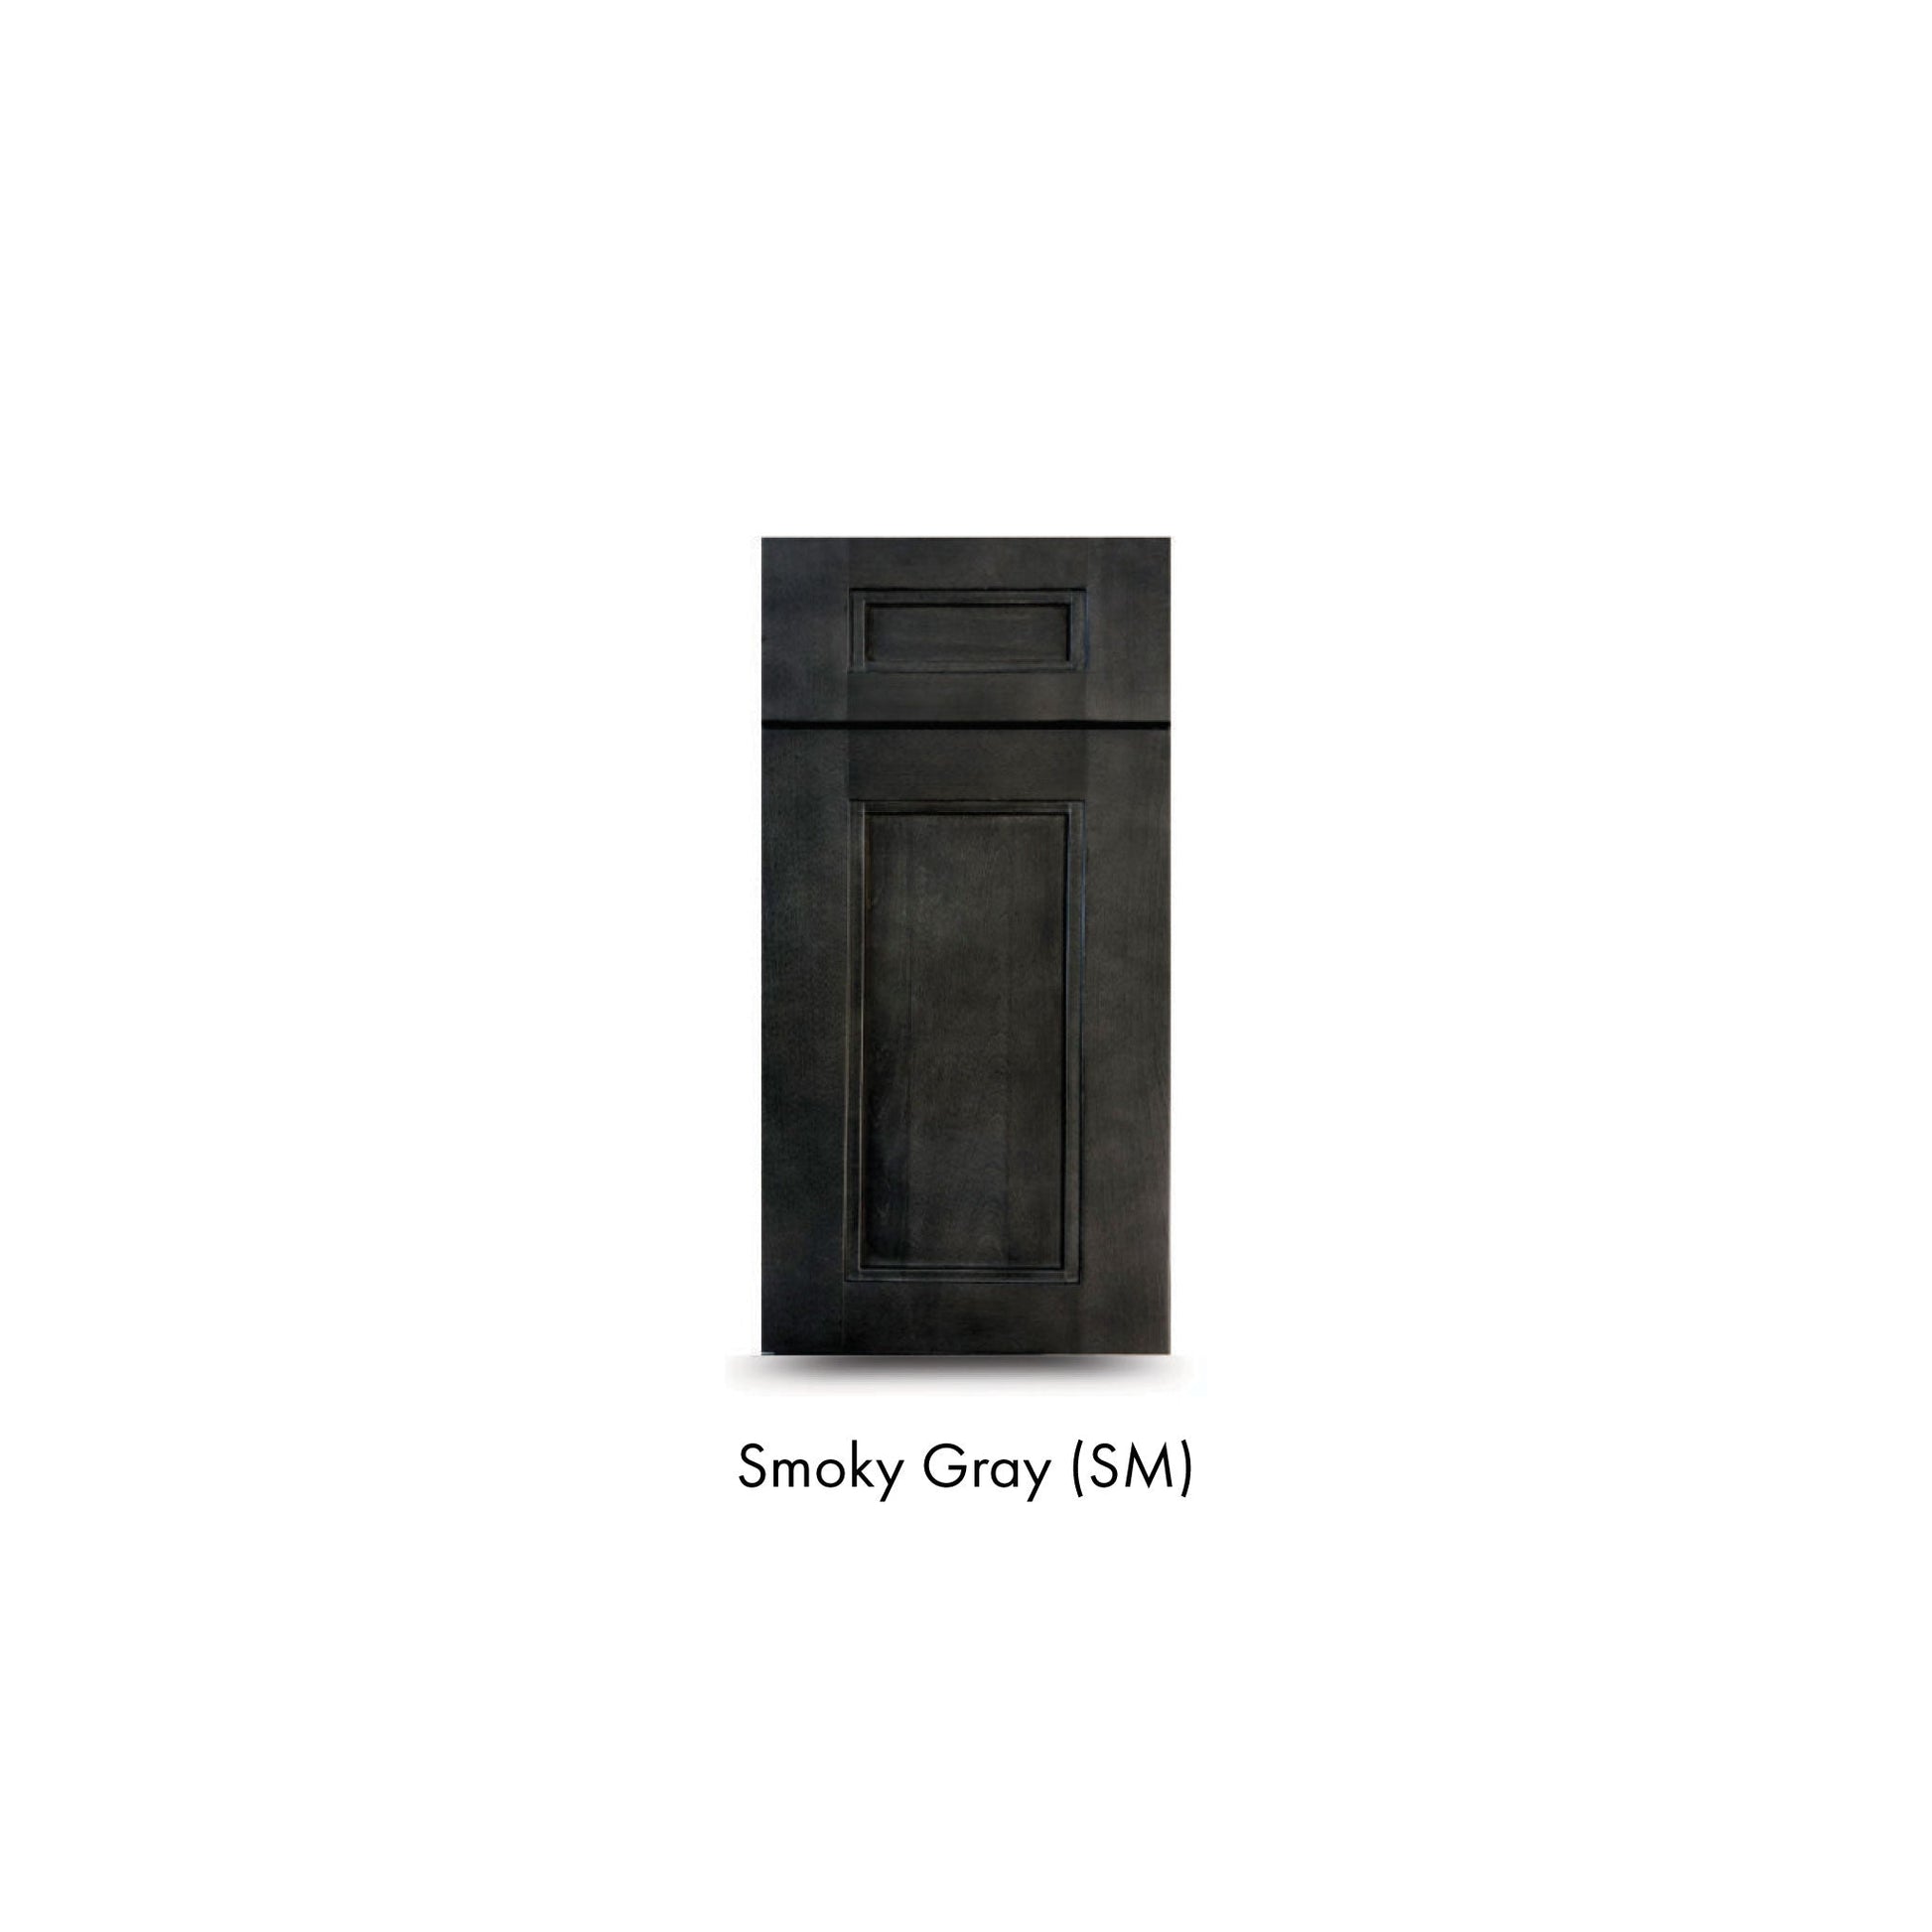 Ratel 30" 2-Door Smoky Gray Vanity With Dummy Drawer